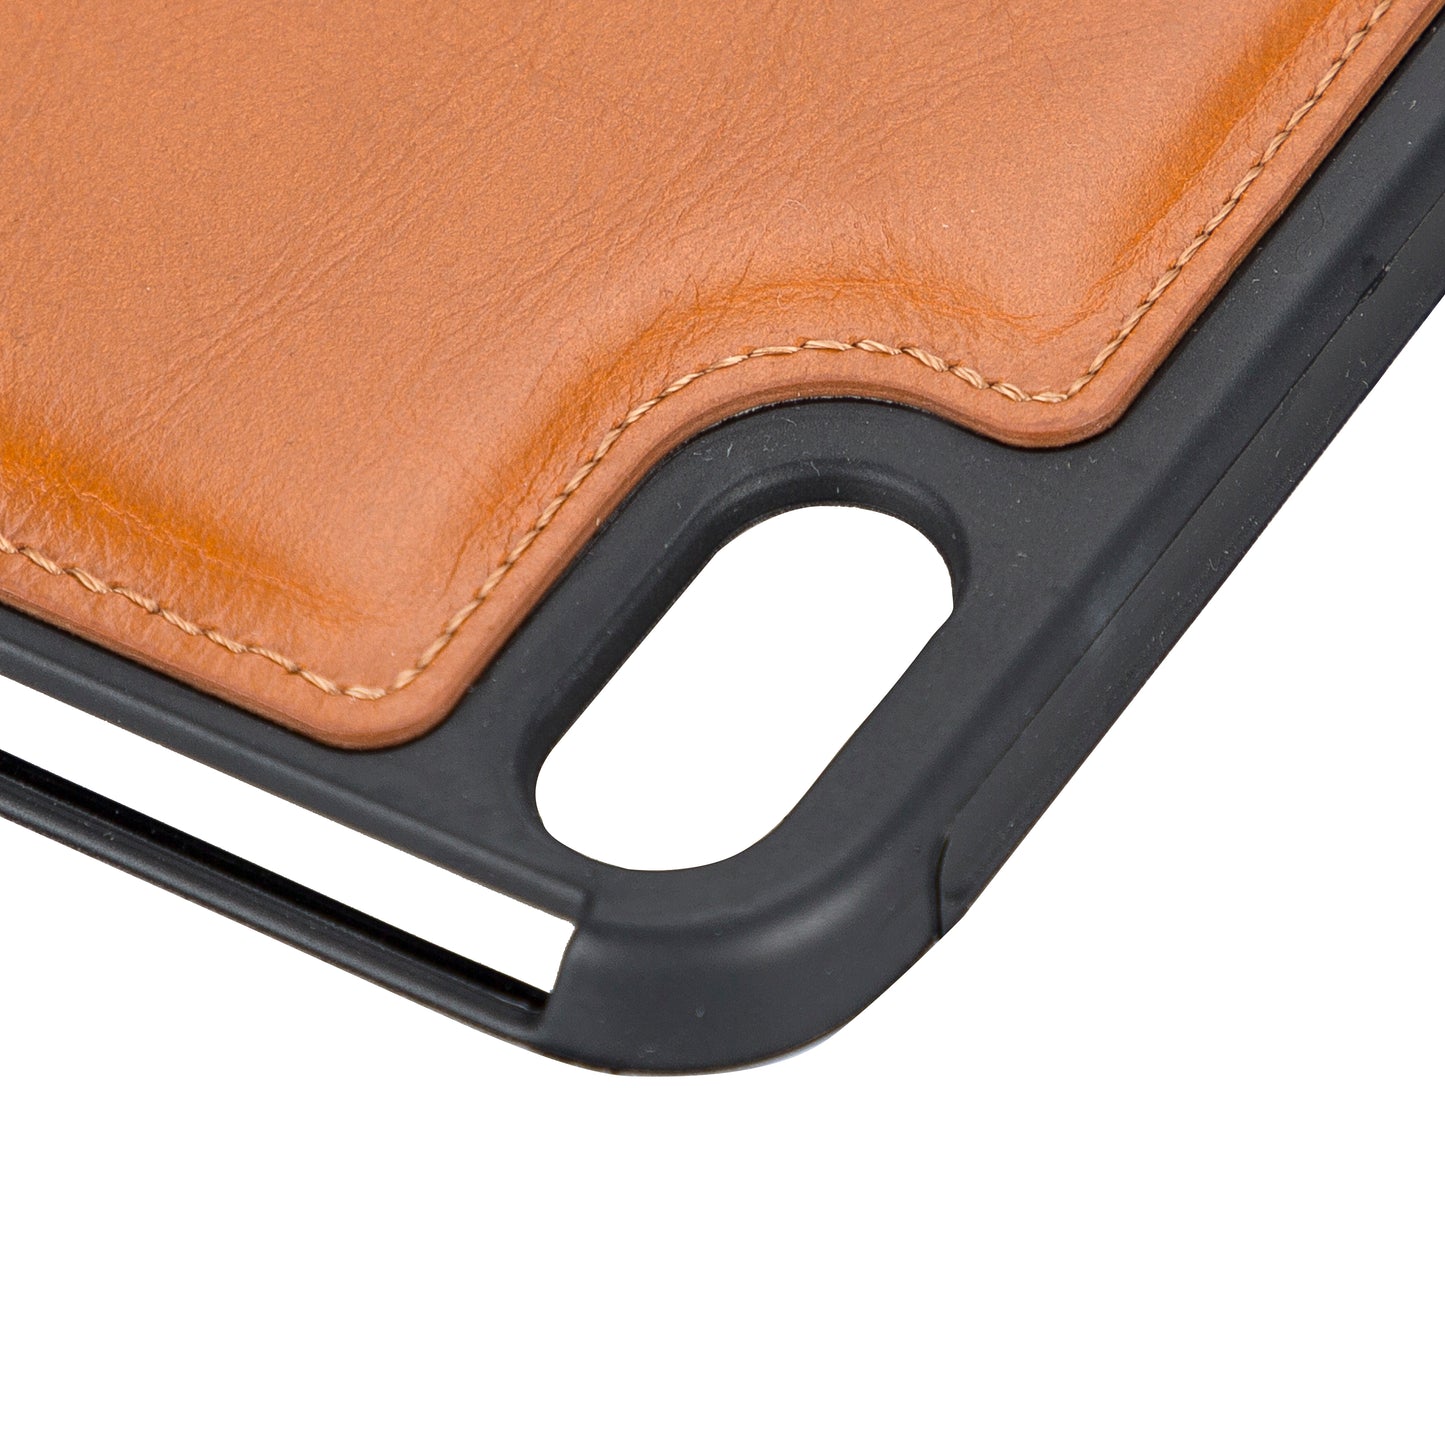 Apple iPad Mini (6") Leather Case - Light Brown